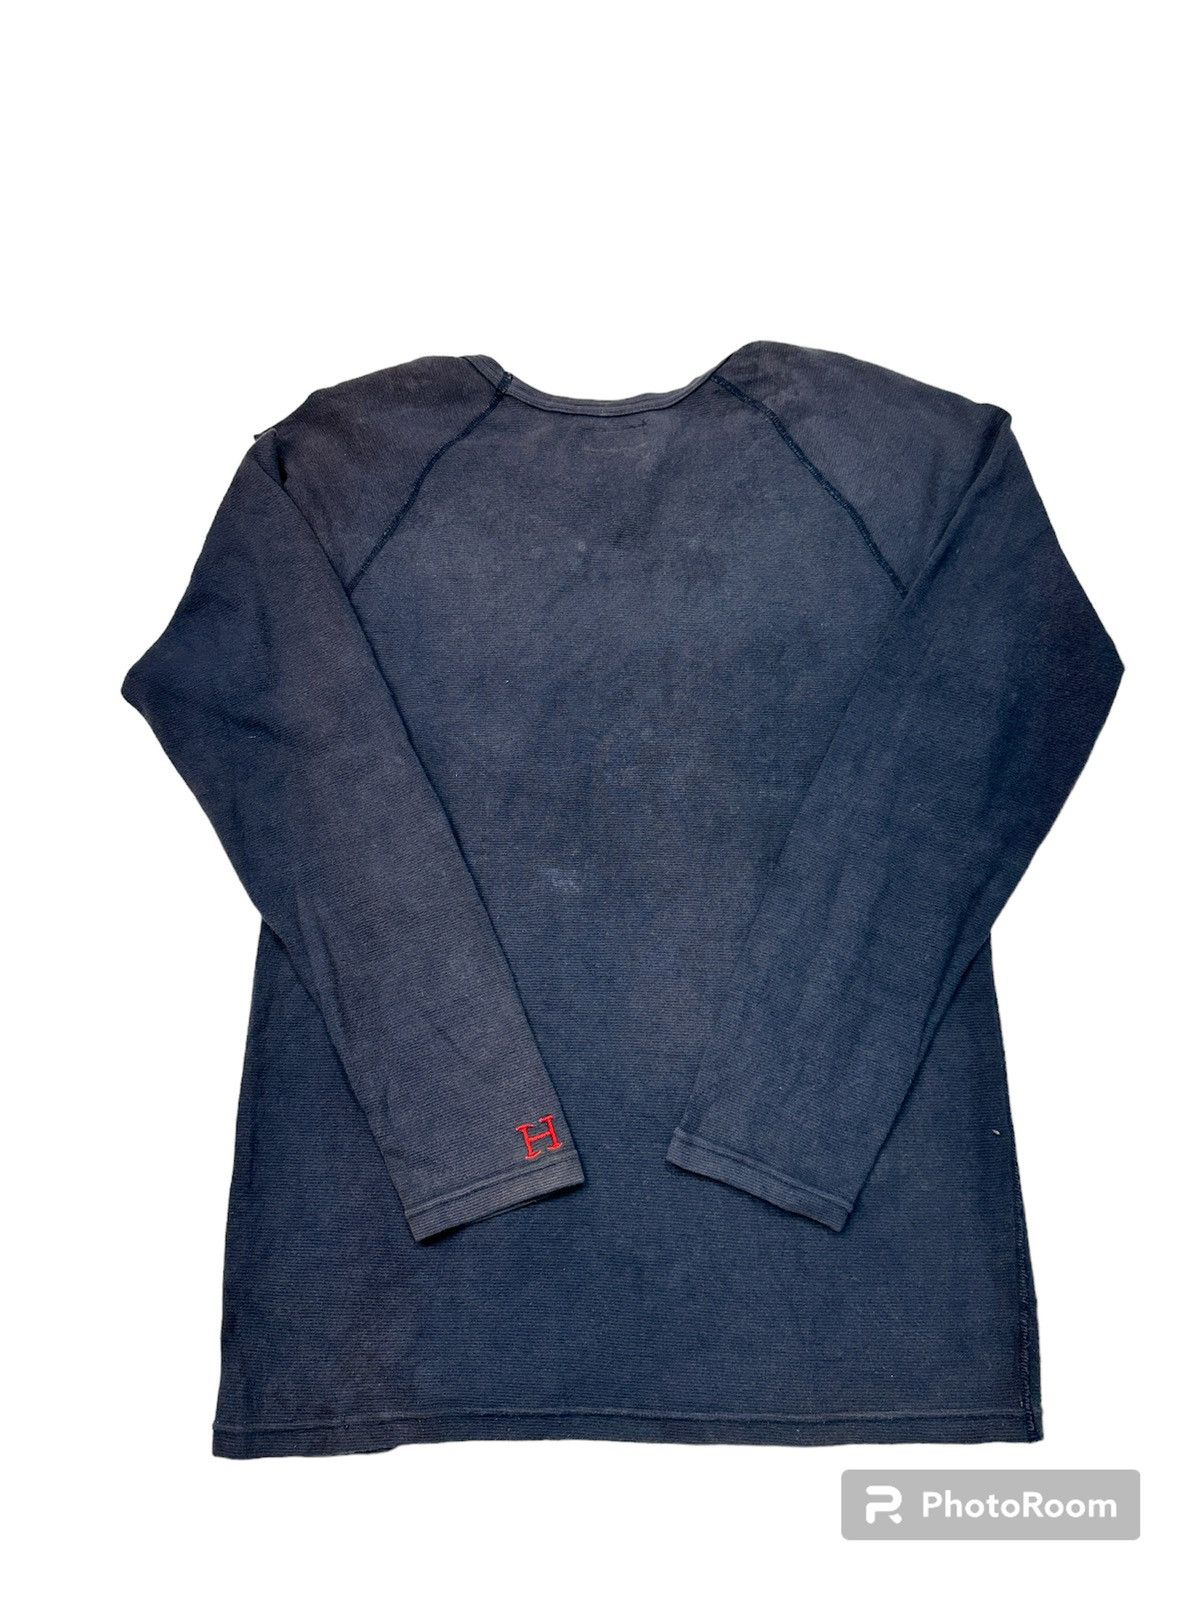 Vintage HR Market plain long sleeve tee shirt Size US S / EU 44-46 / 1 - 3 Thumbnail